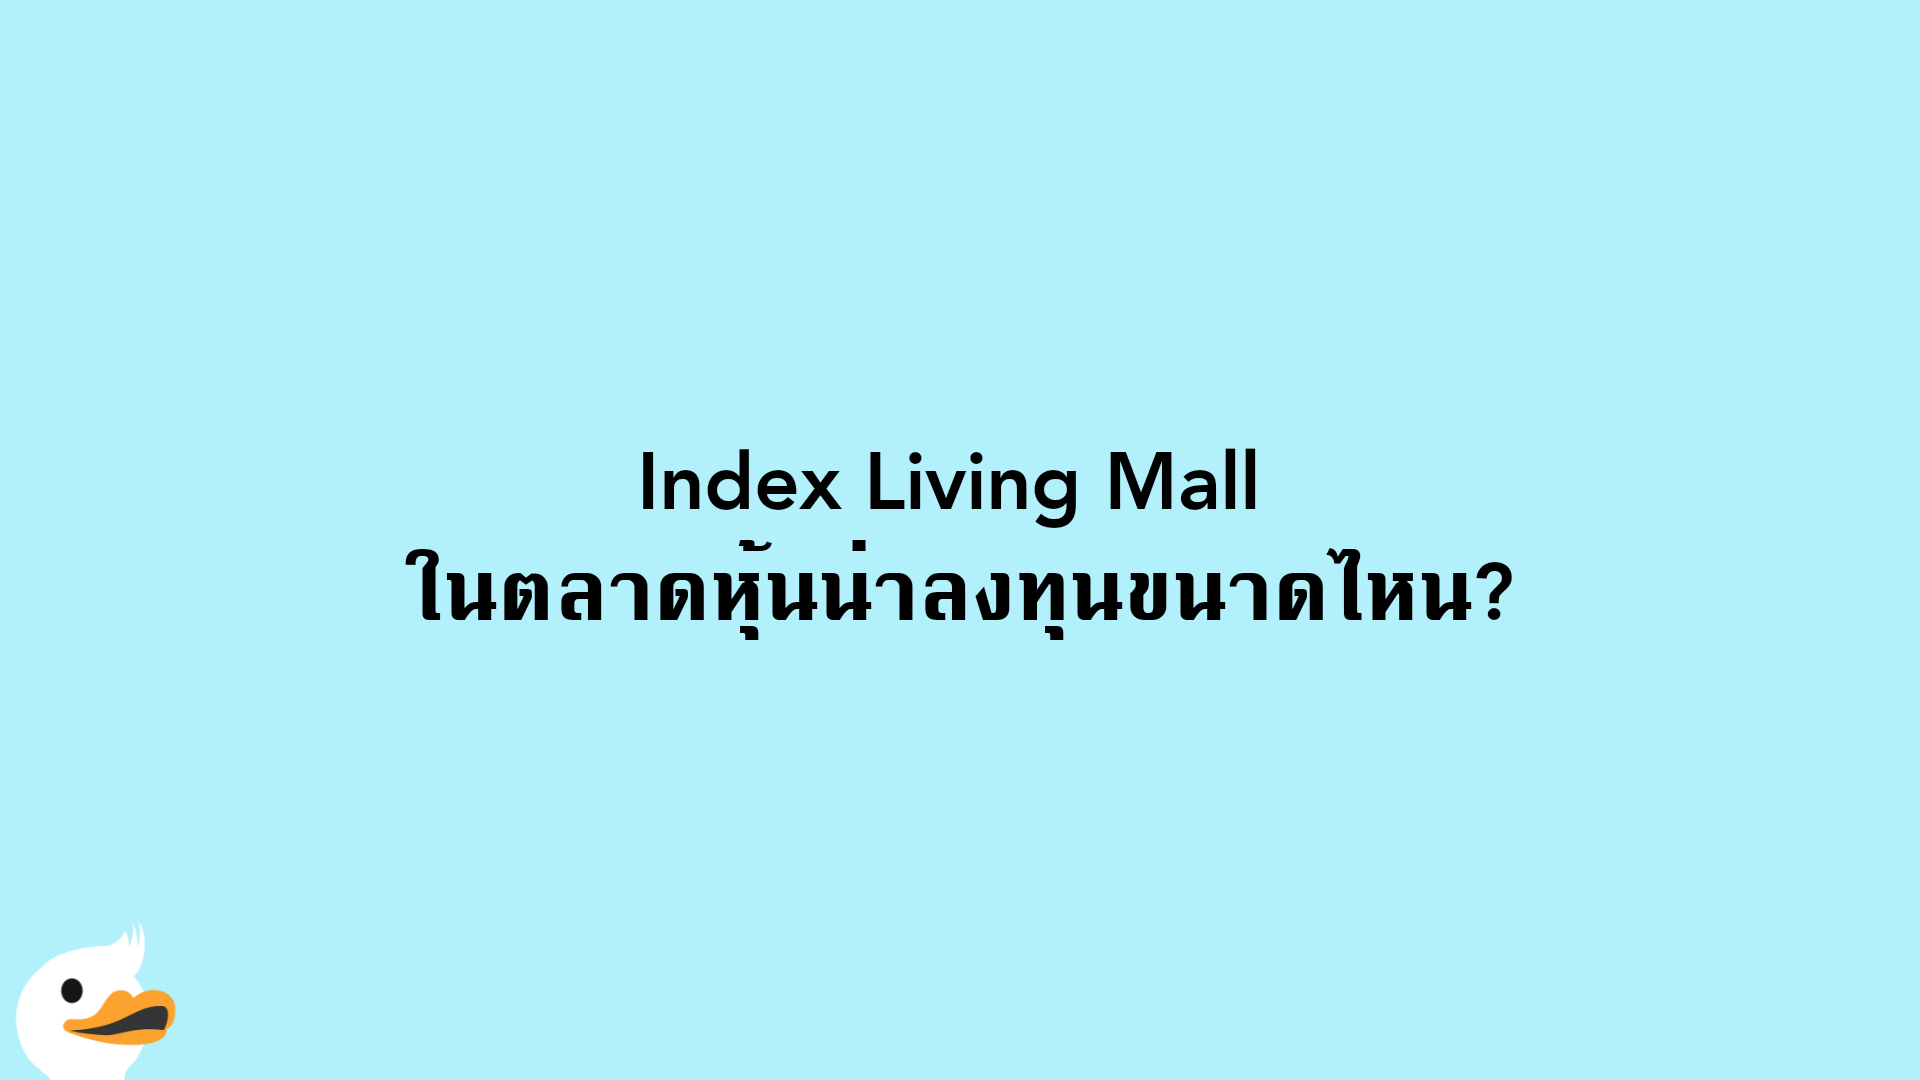 Index Living Mall ในตลาดหุ้นน่าลงทุนขนาดไหน?